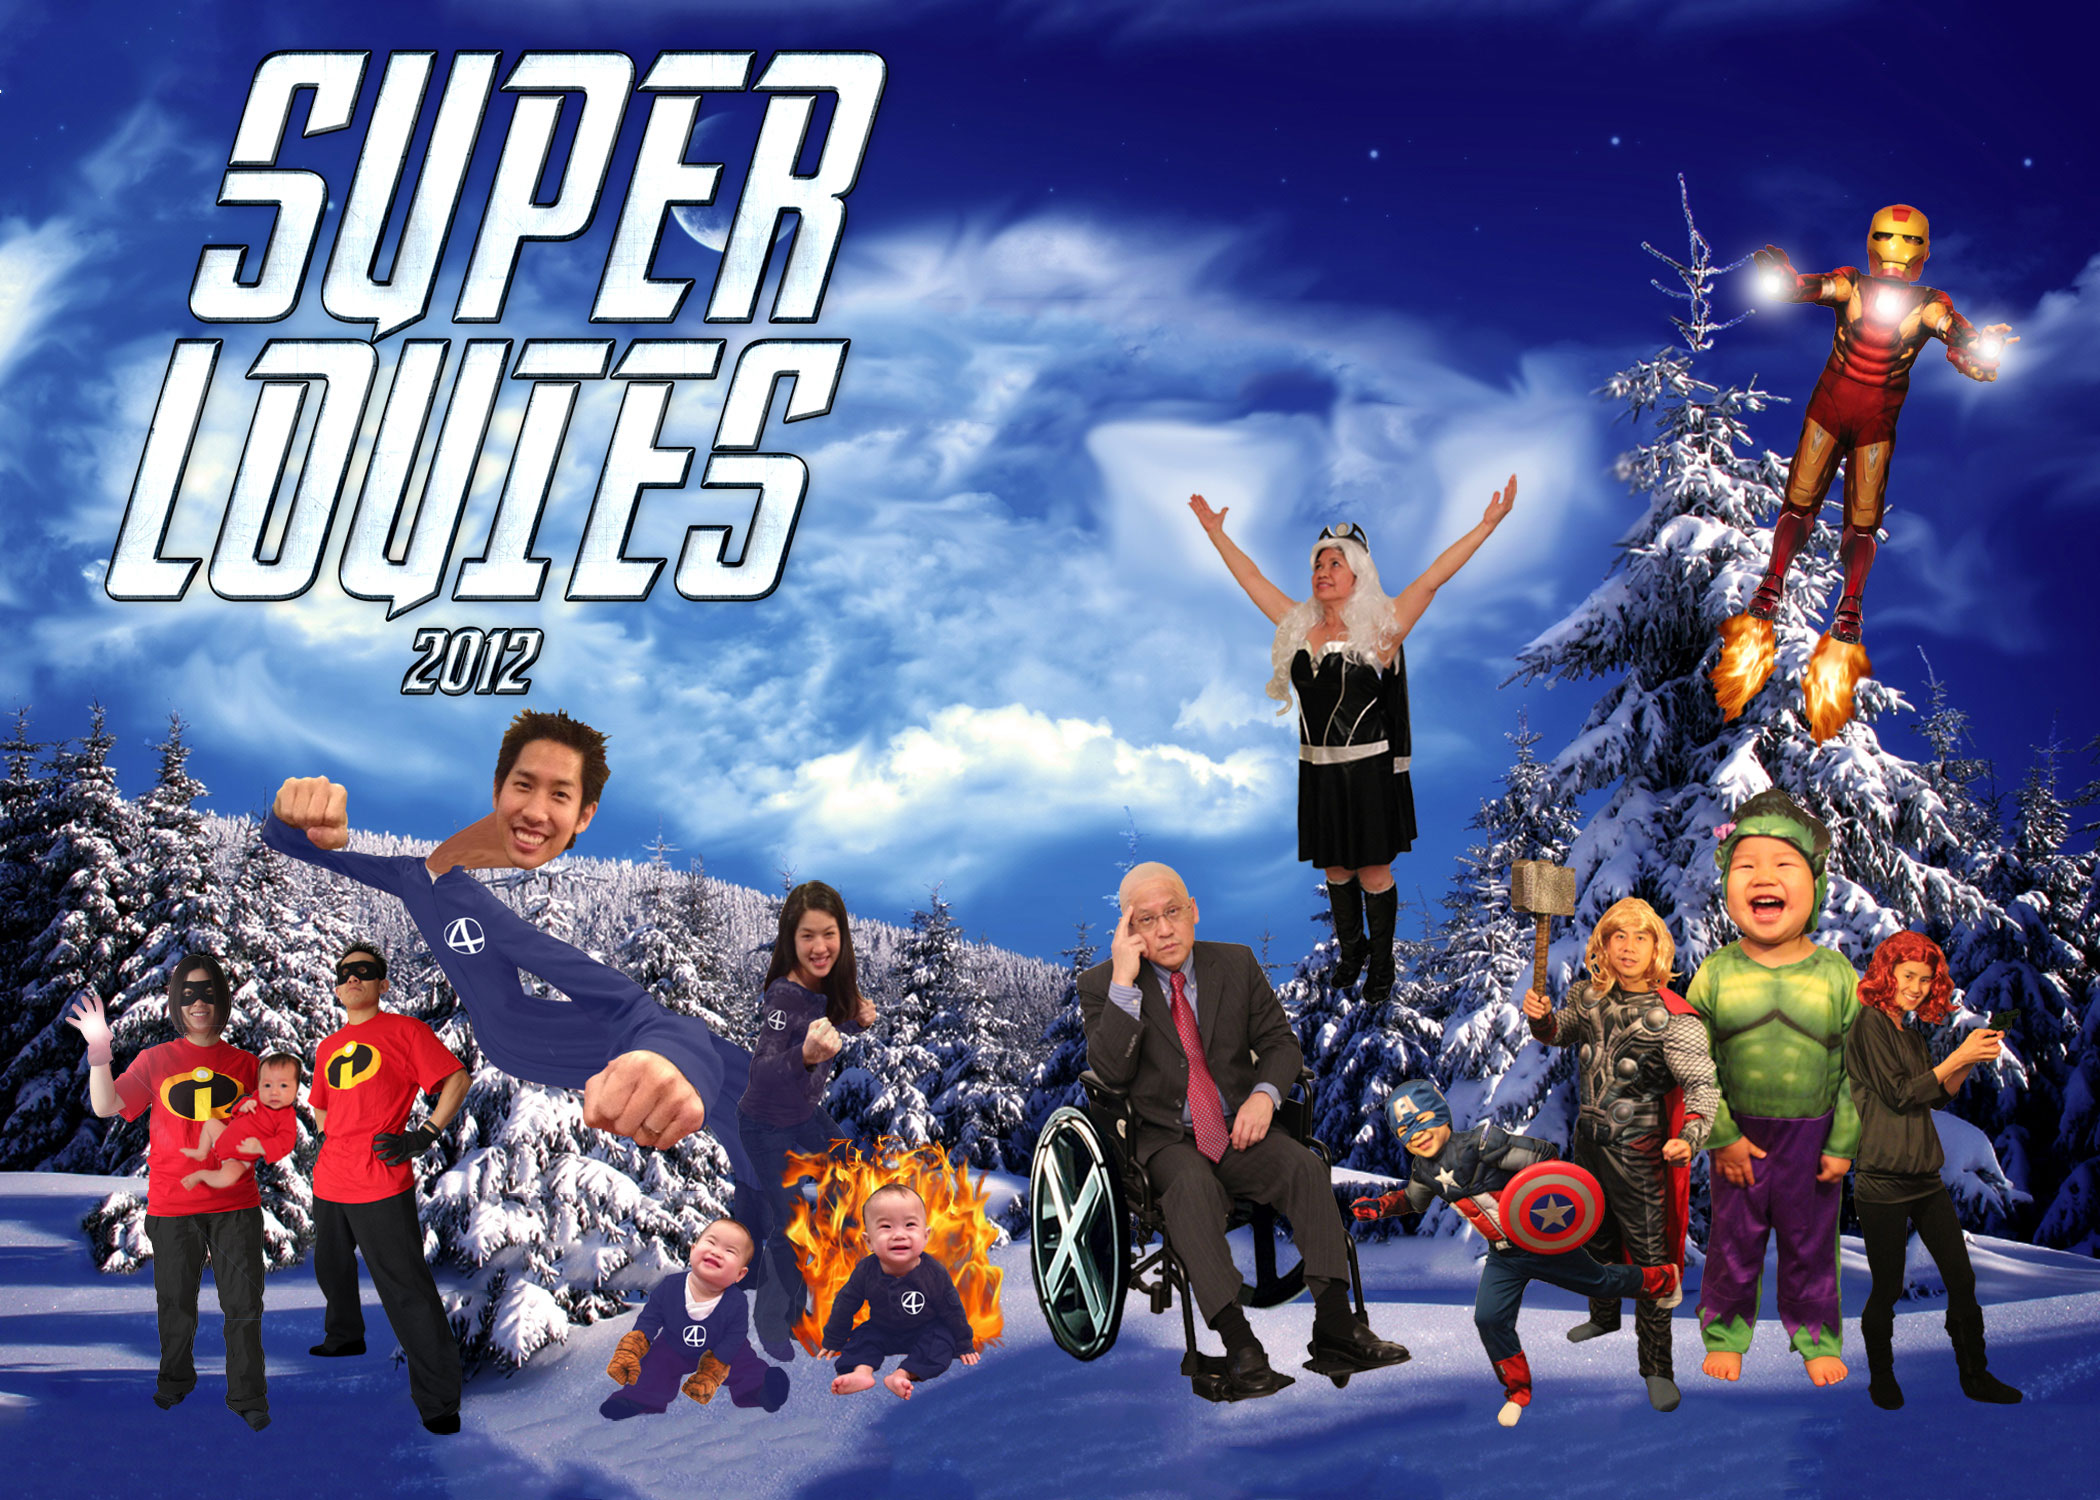 Super Louies 2012